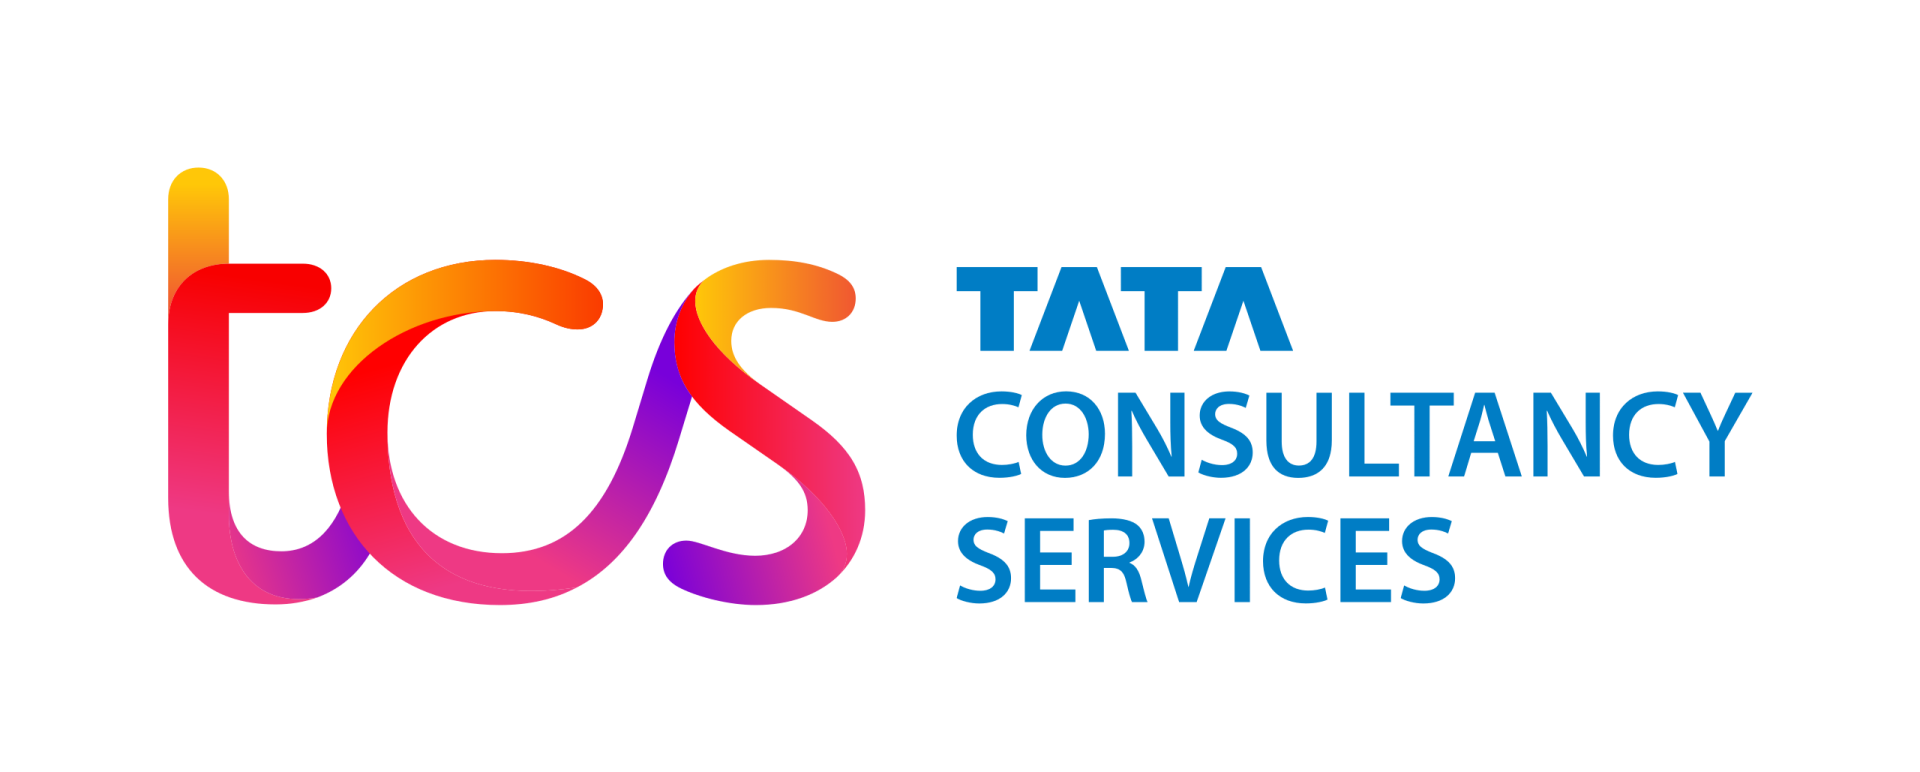 tcs tata consultancy services logo